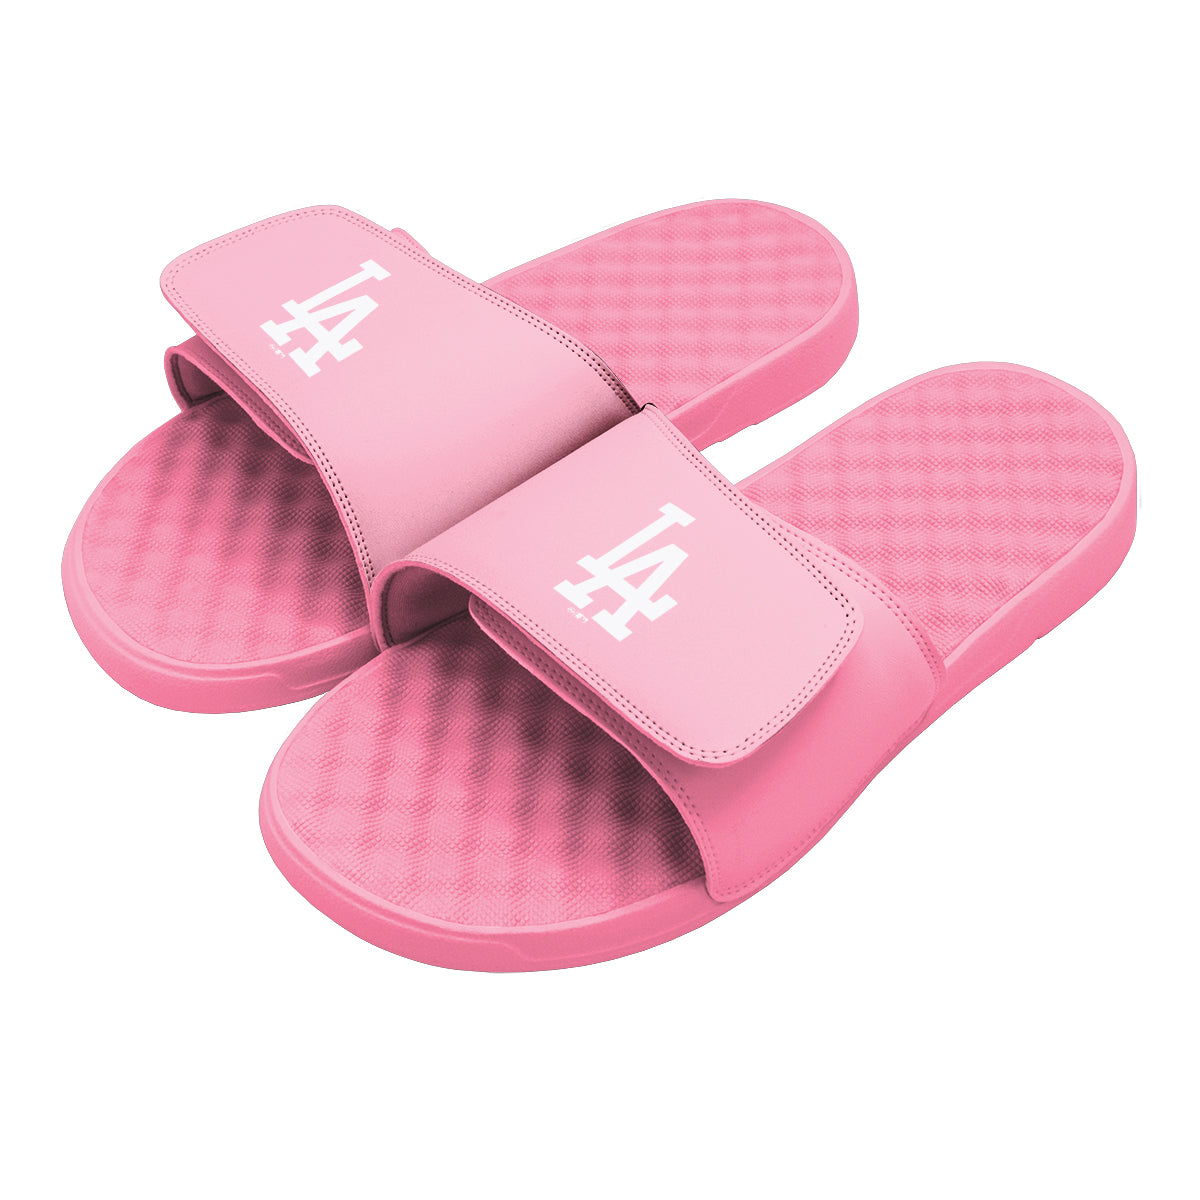 Los Angeles Dodgers Primary Pink Slides